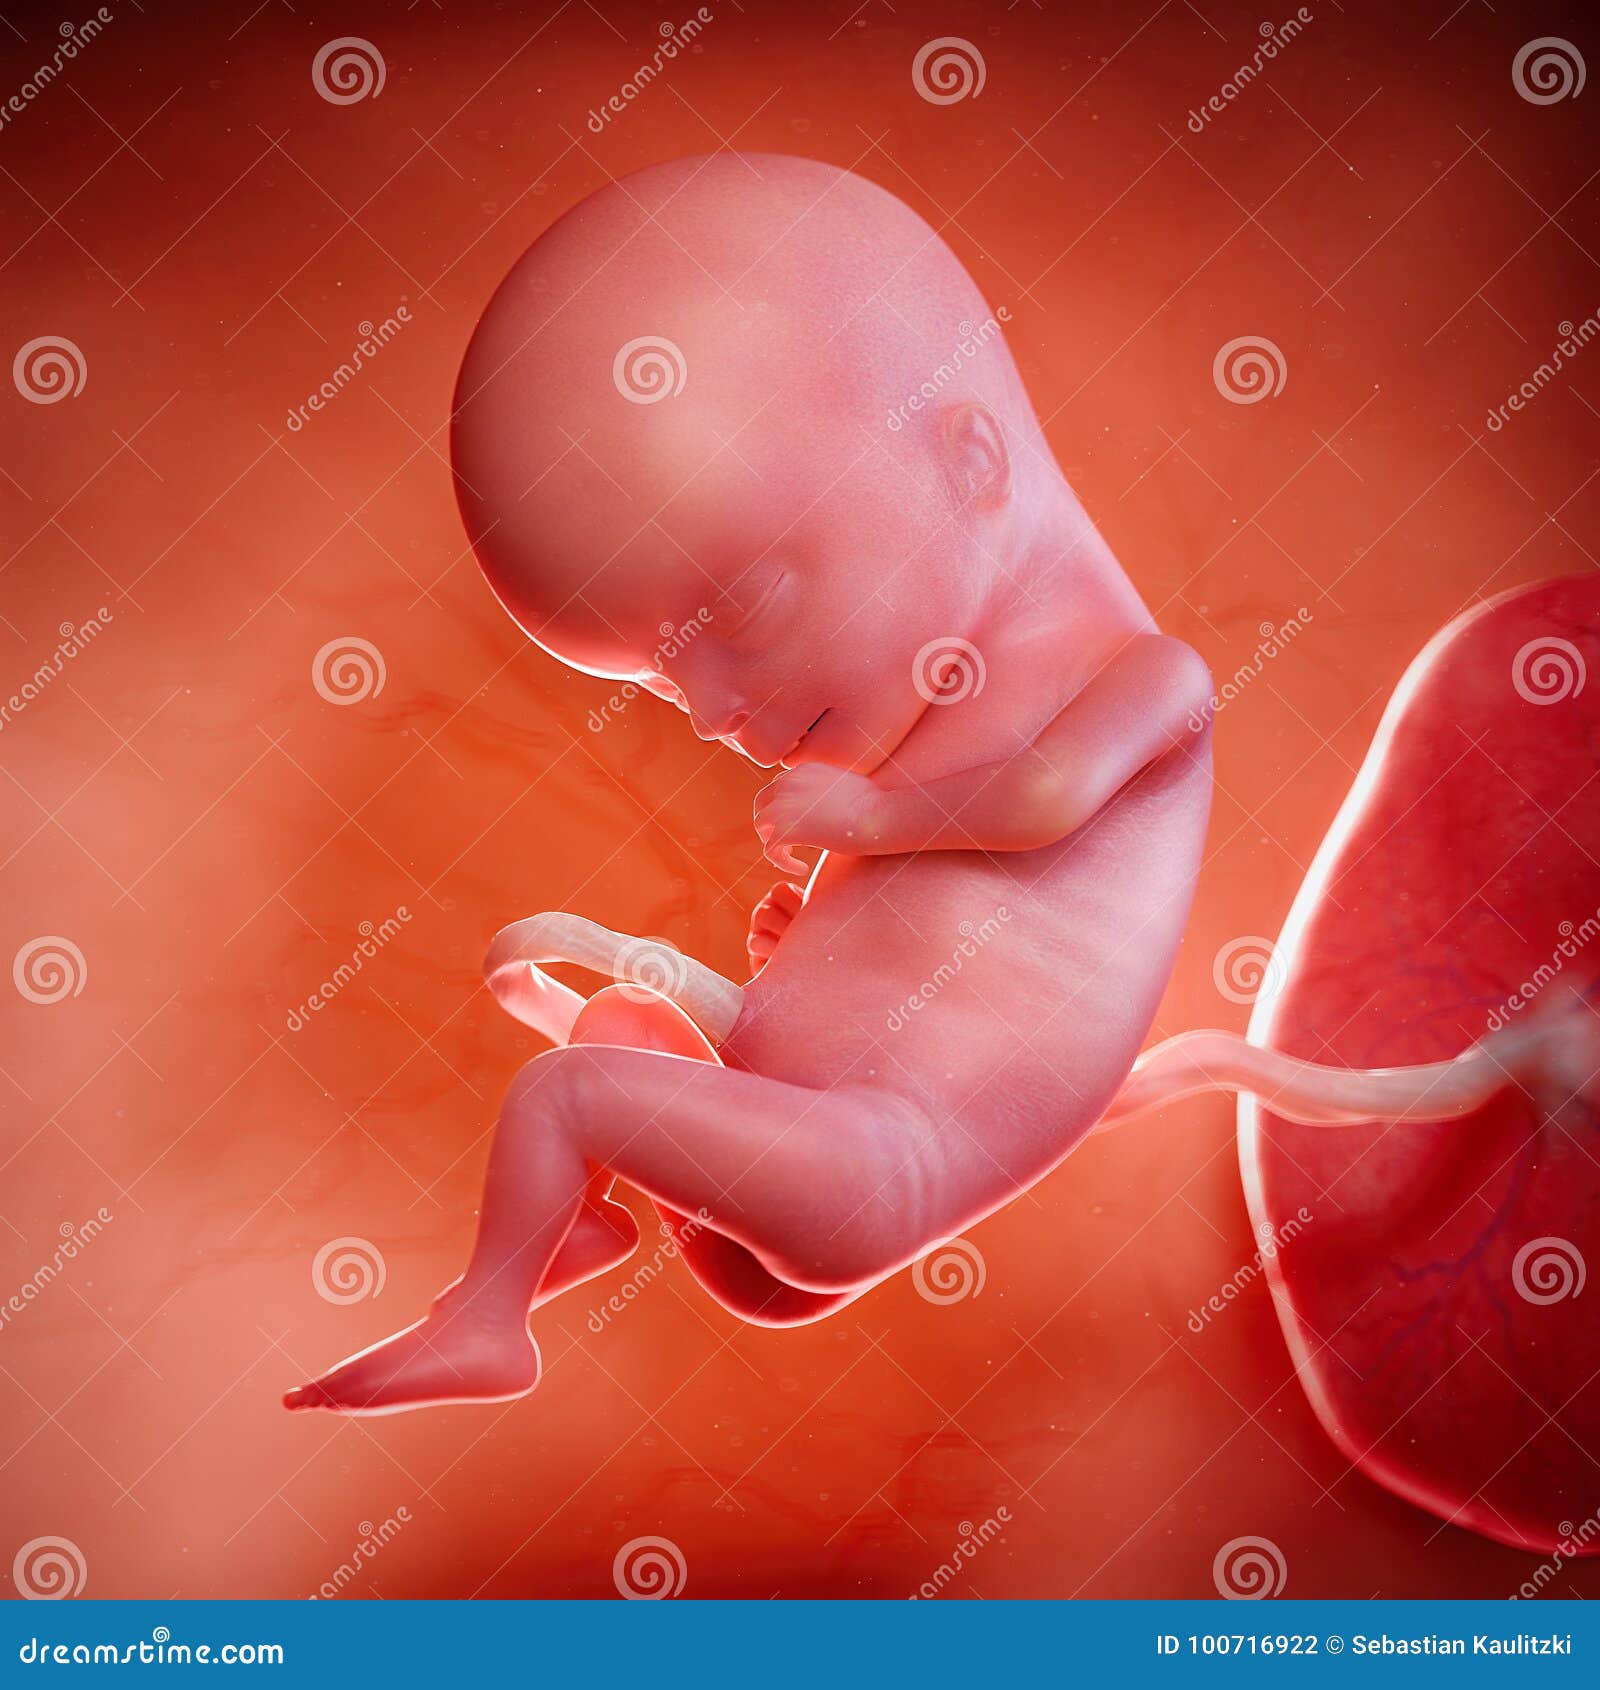 a fetus week 15